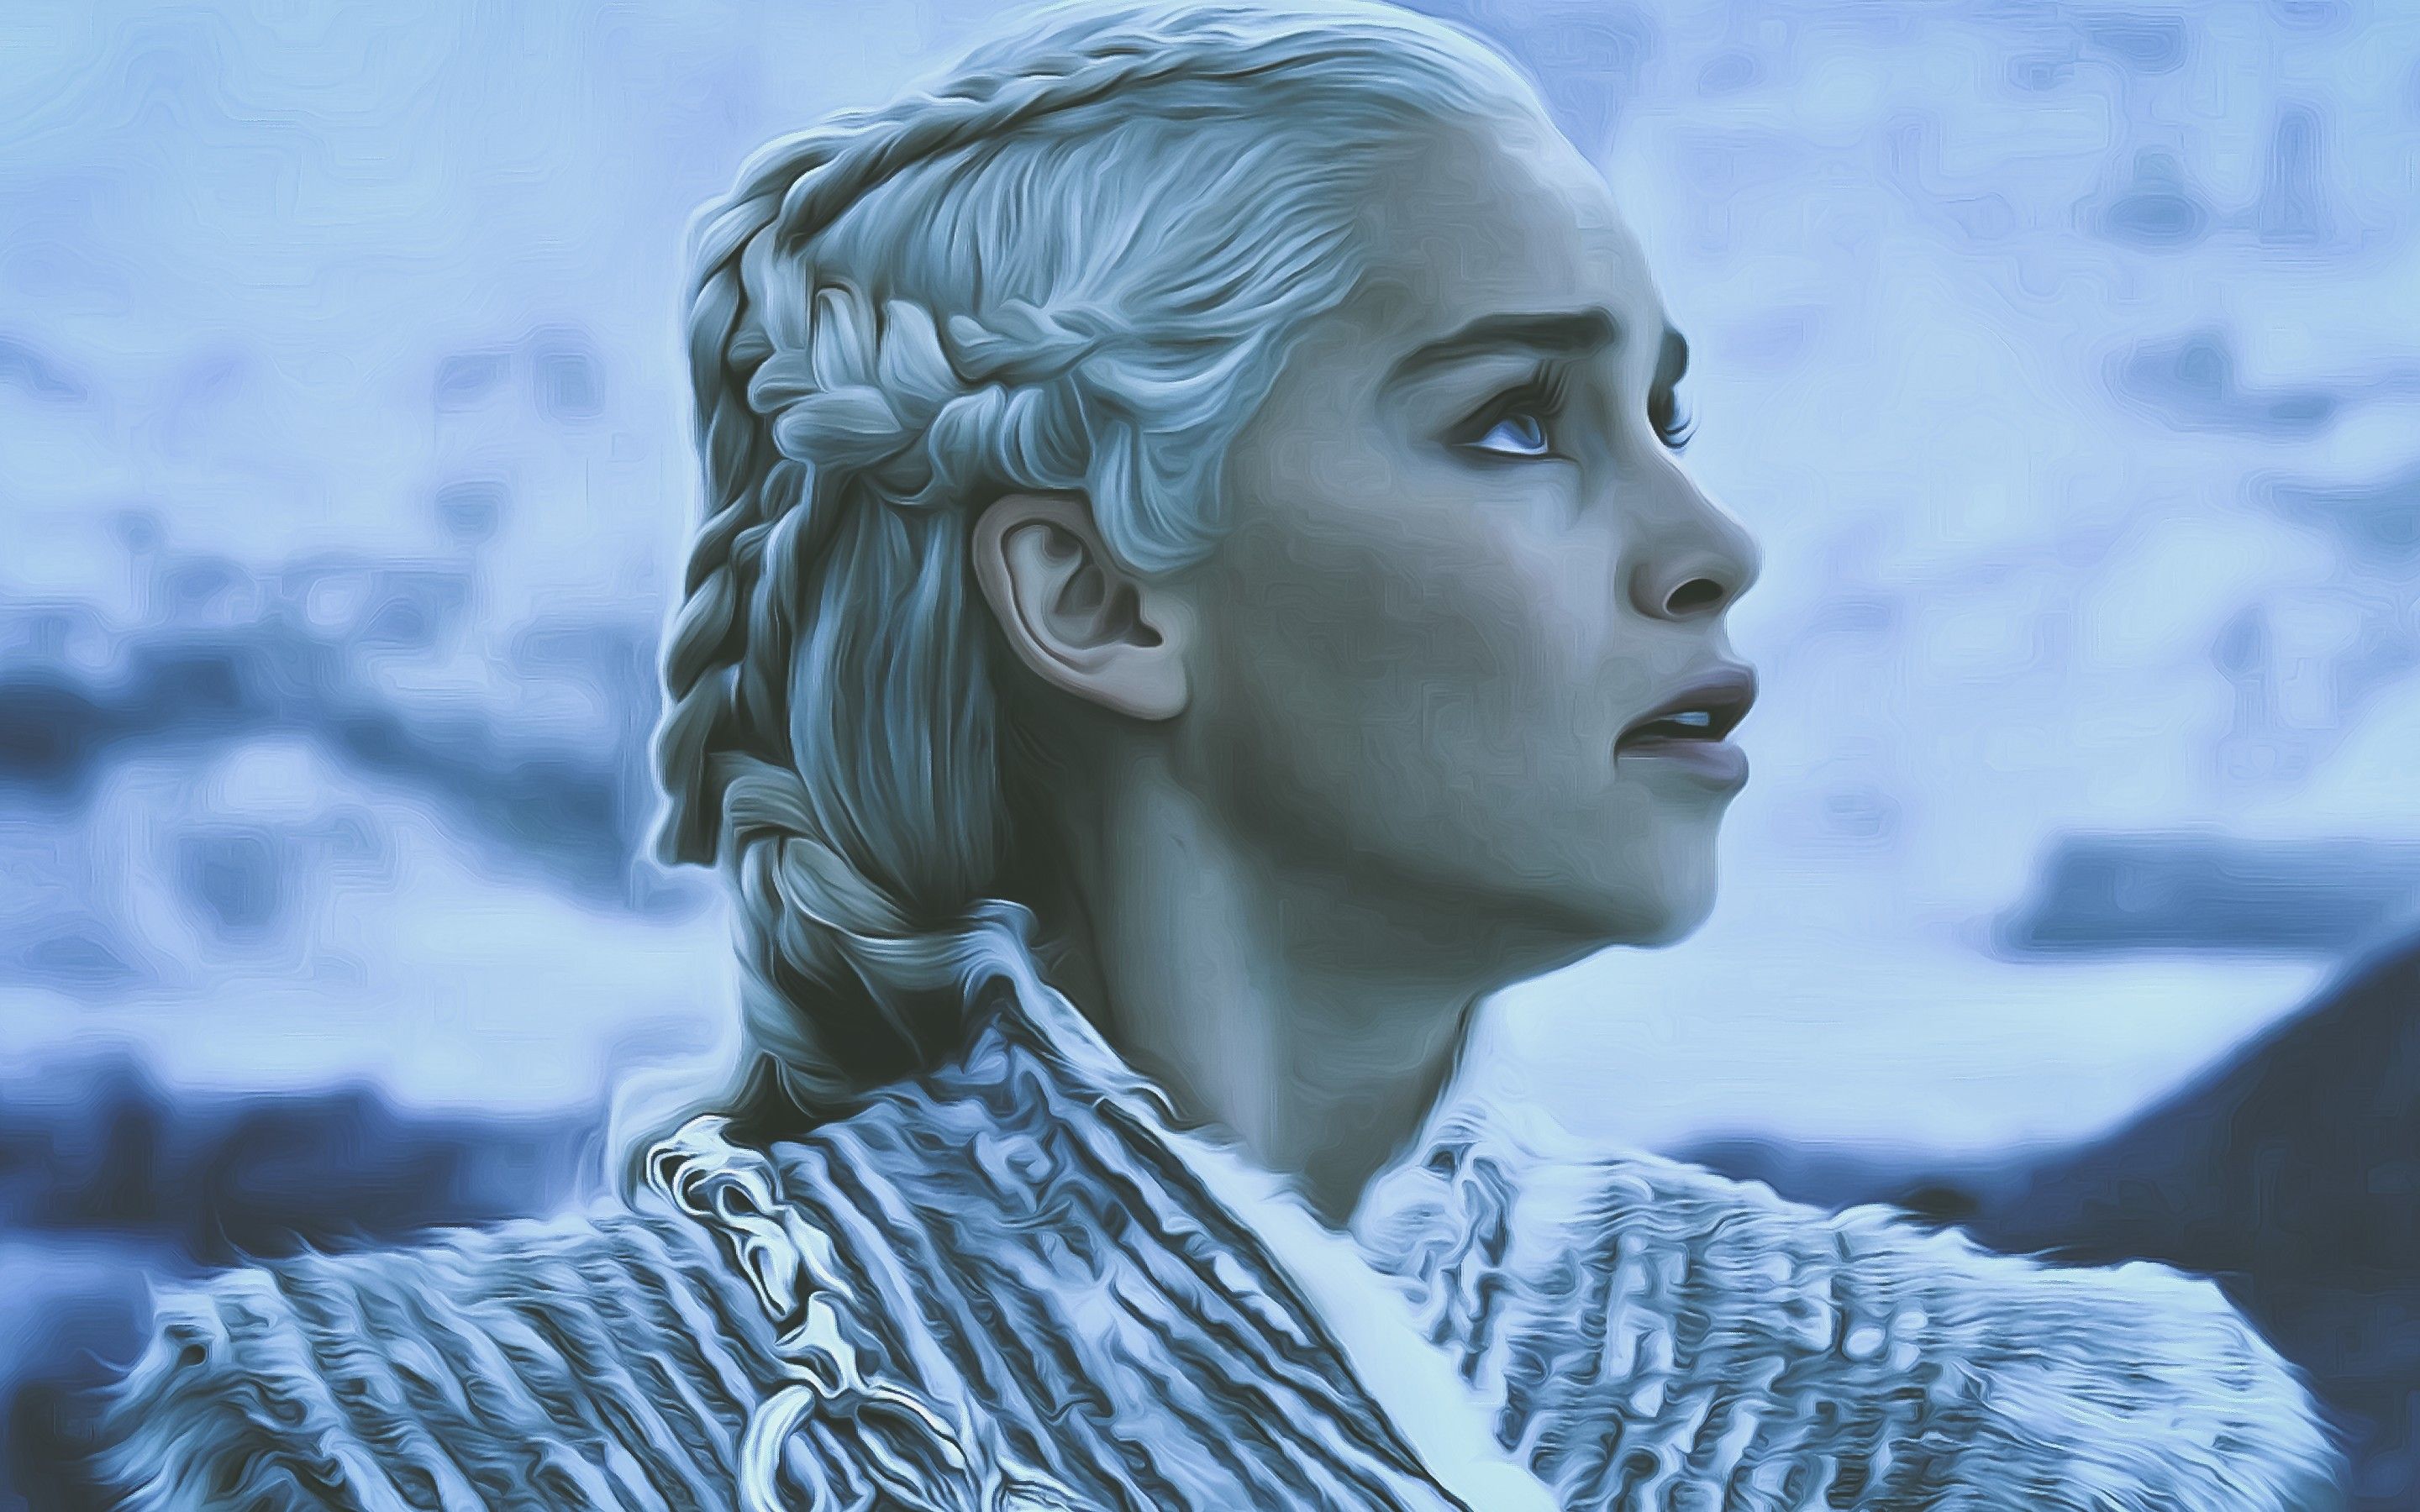 Game Of Thrones Season 8 Jon Snow And Daenerys Targaryen In Winterfell Episode 1 Image Wallpapers